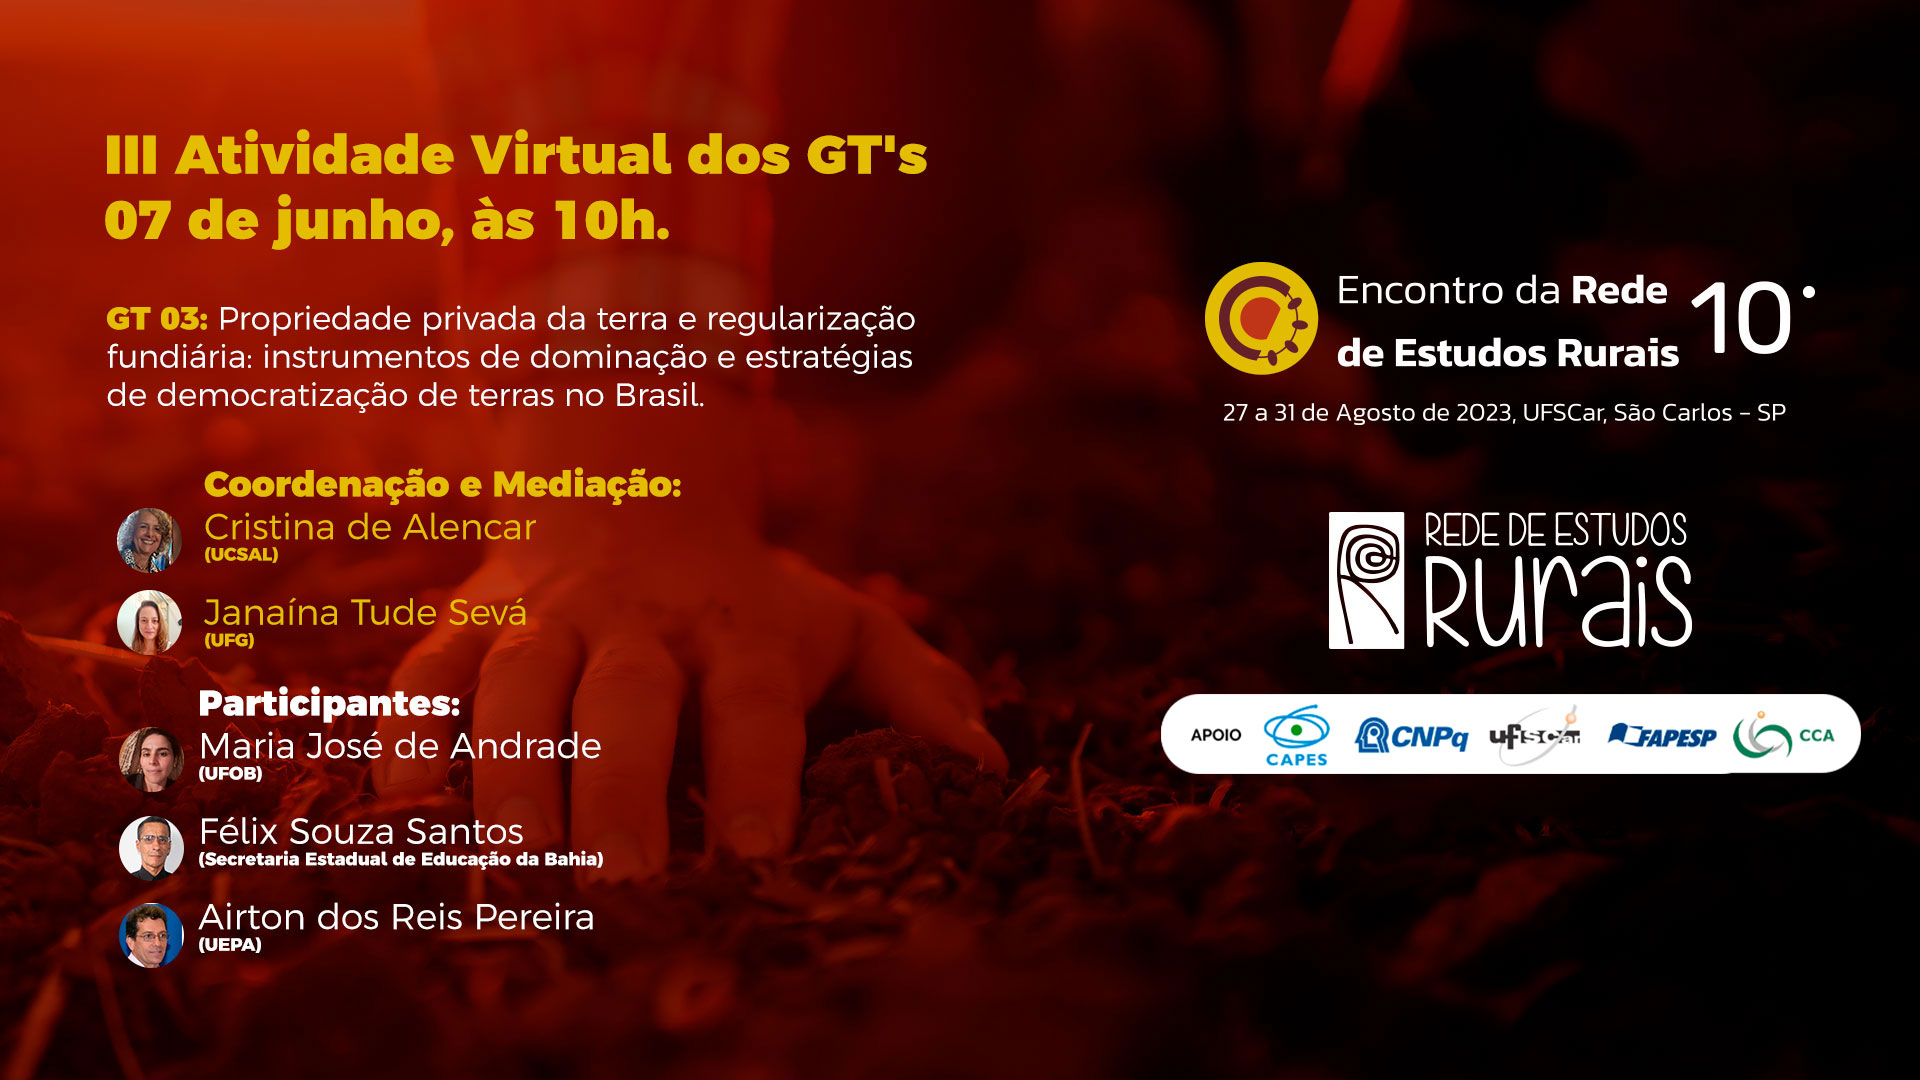 III Atividade Virtual dos GTs - 10º Encontro da Rede de Estudos Rurais